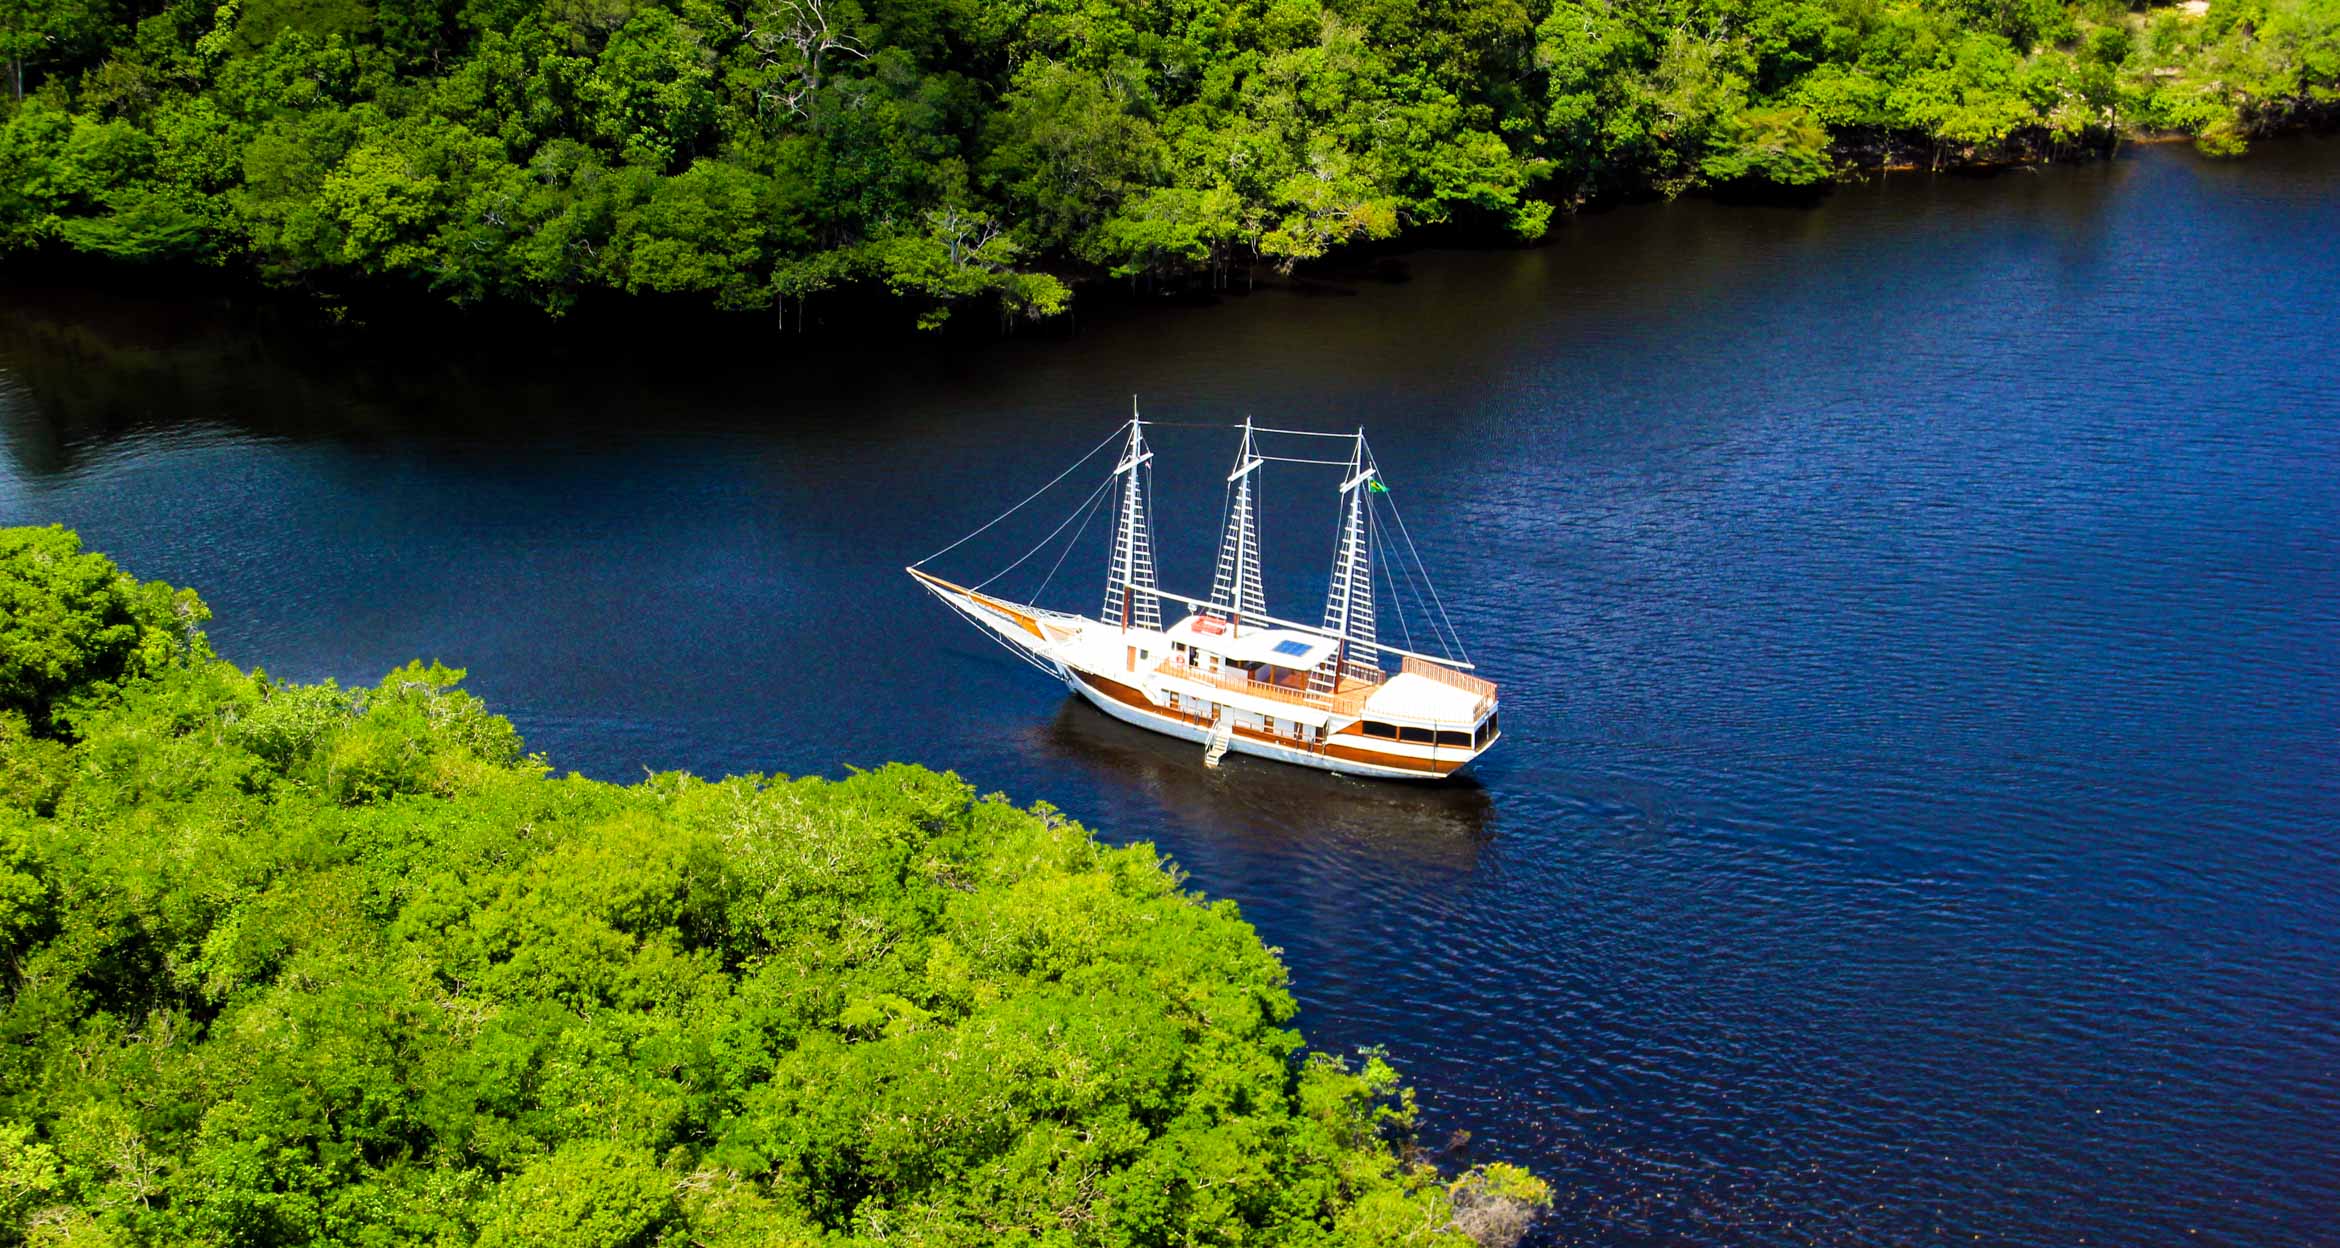 Desafio Brazil Amazon River Cruise 🦋 Manaus River Cruise Tour